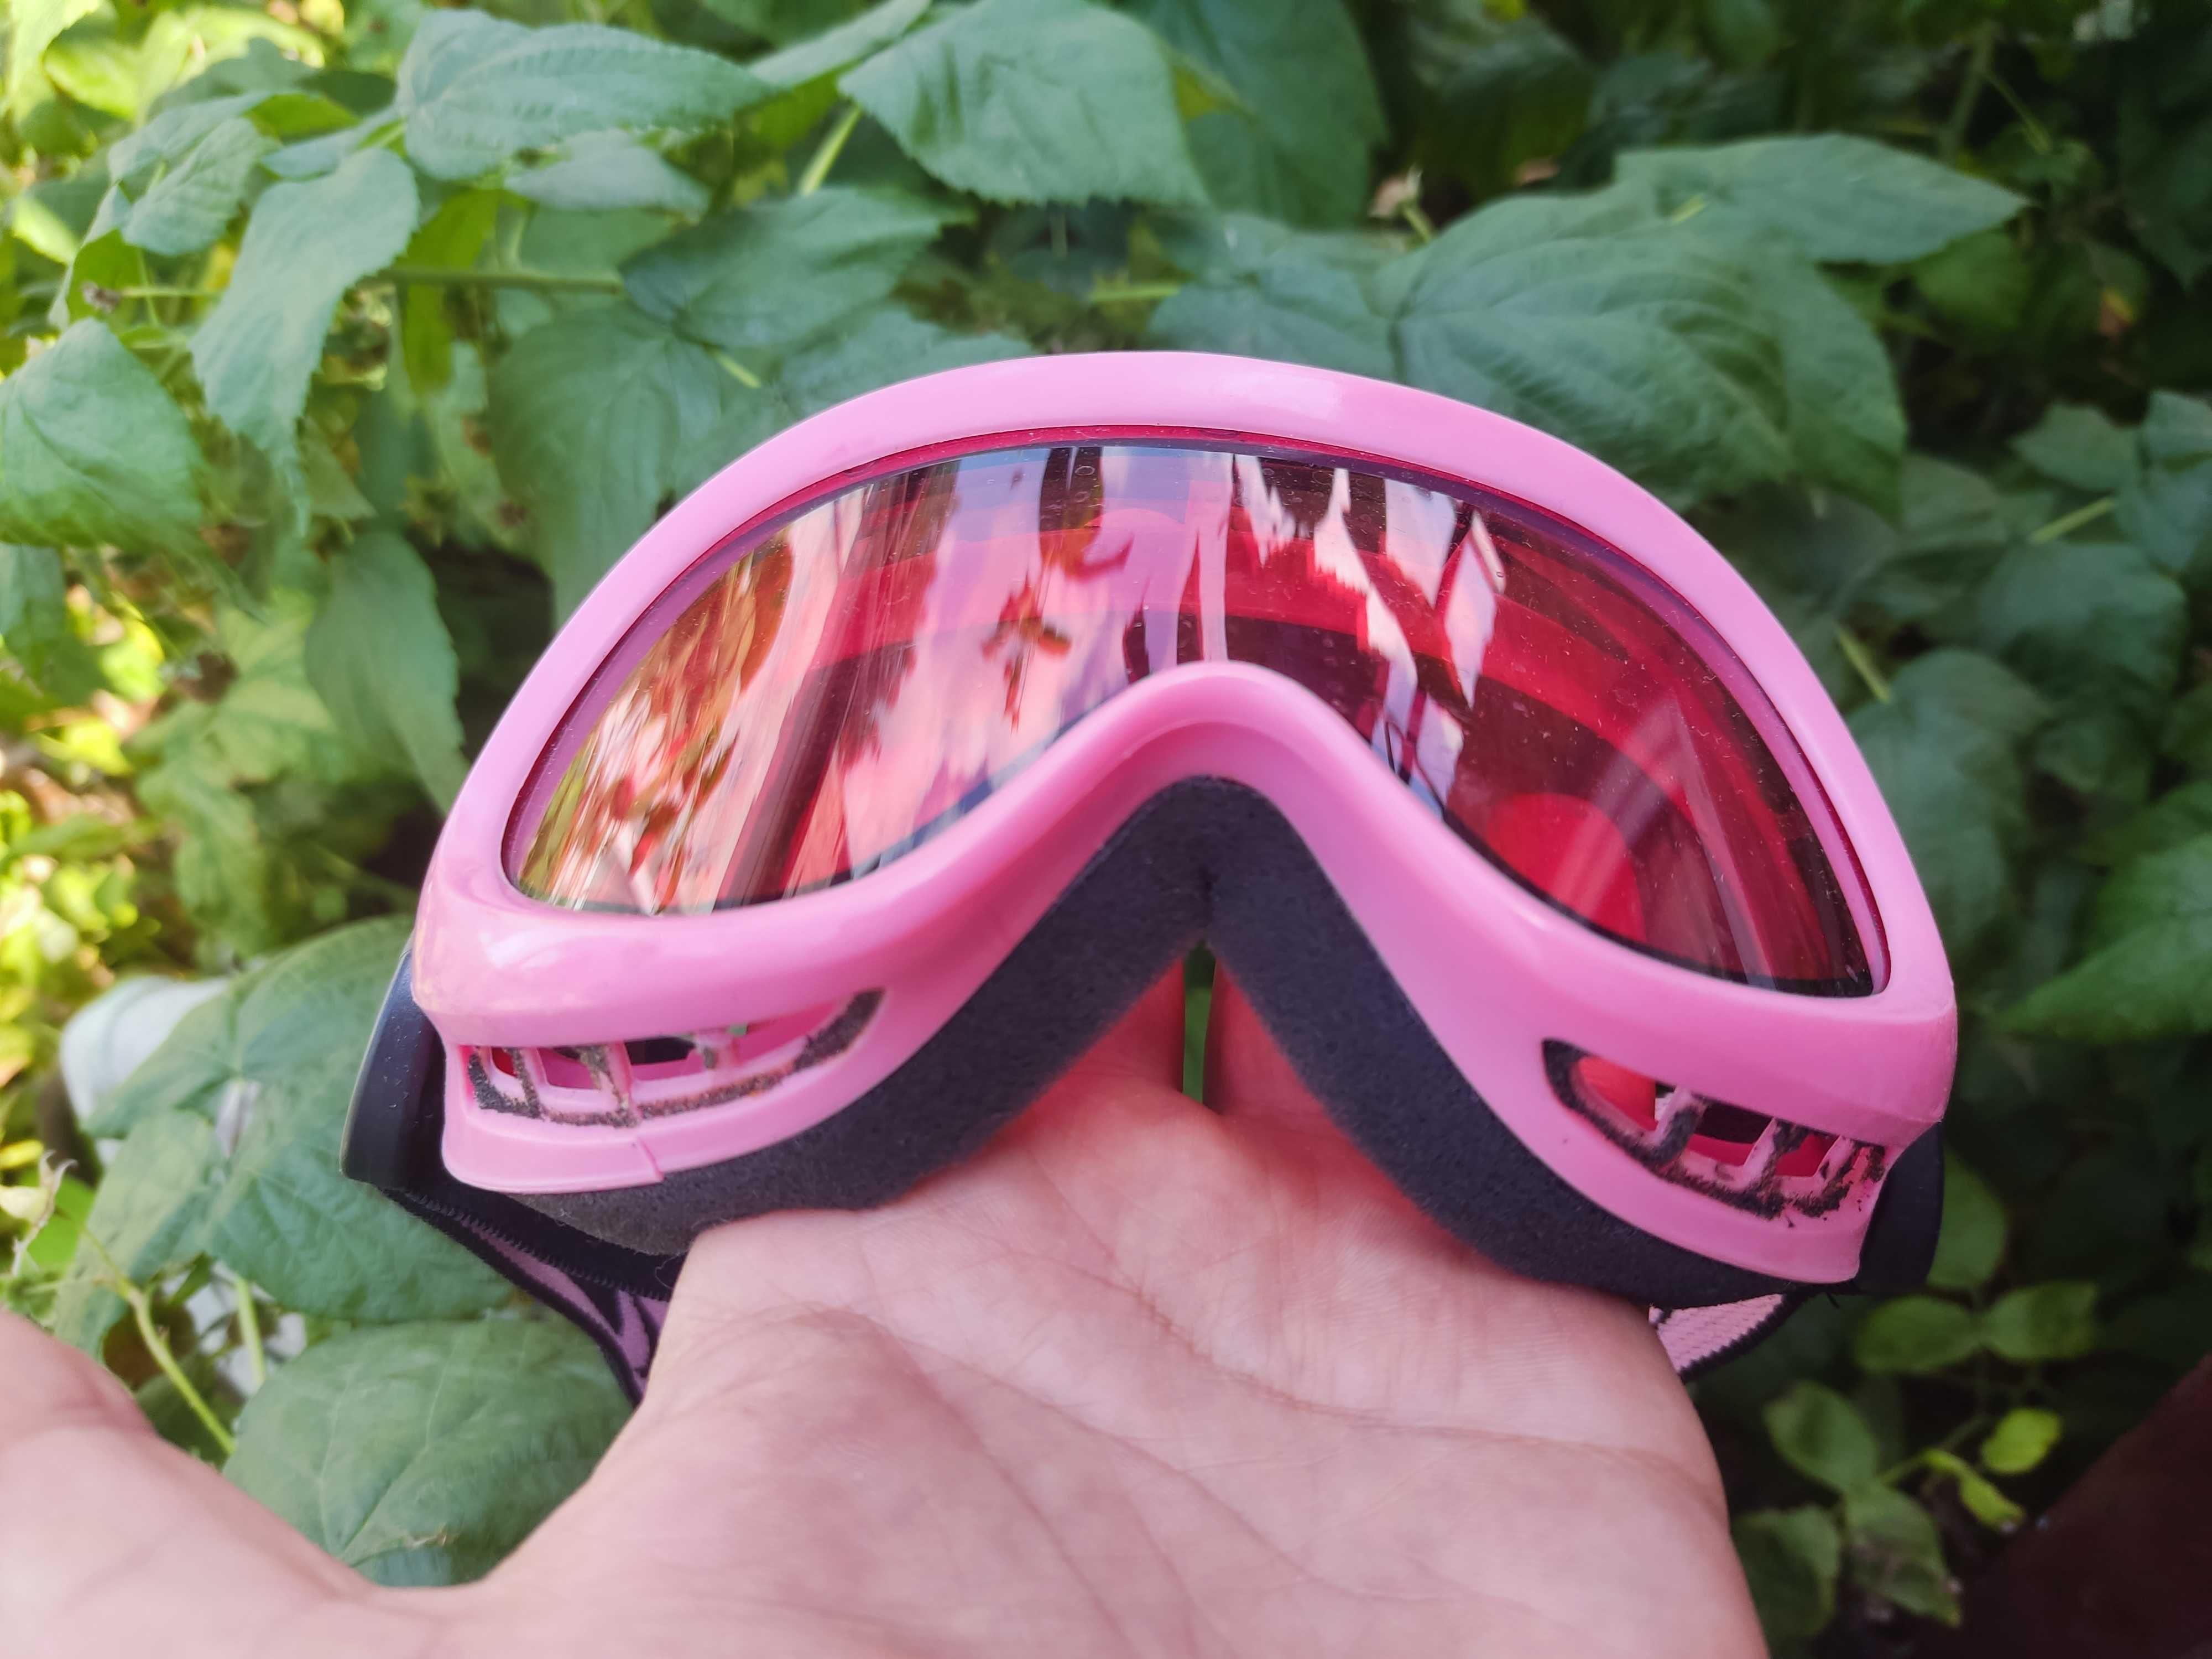 окуляри для мото очки для мотоцикла,сноуборда,лиж